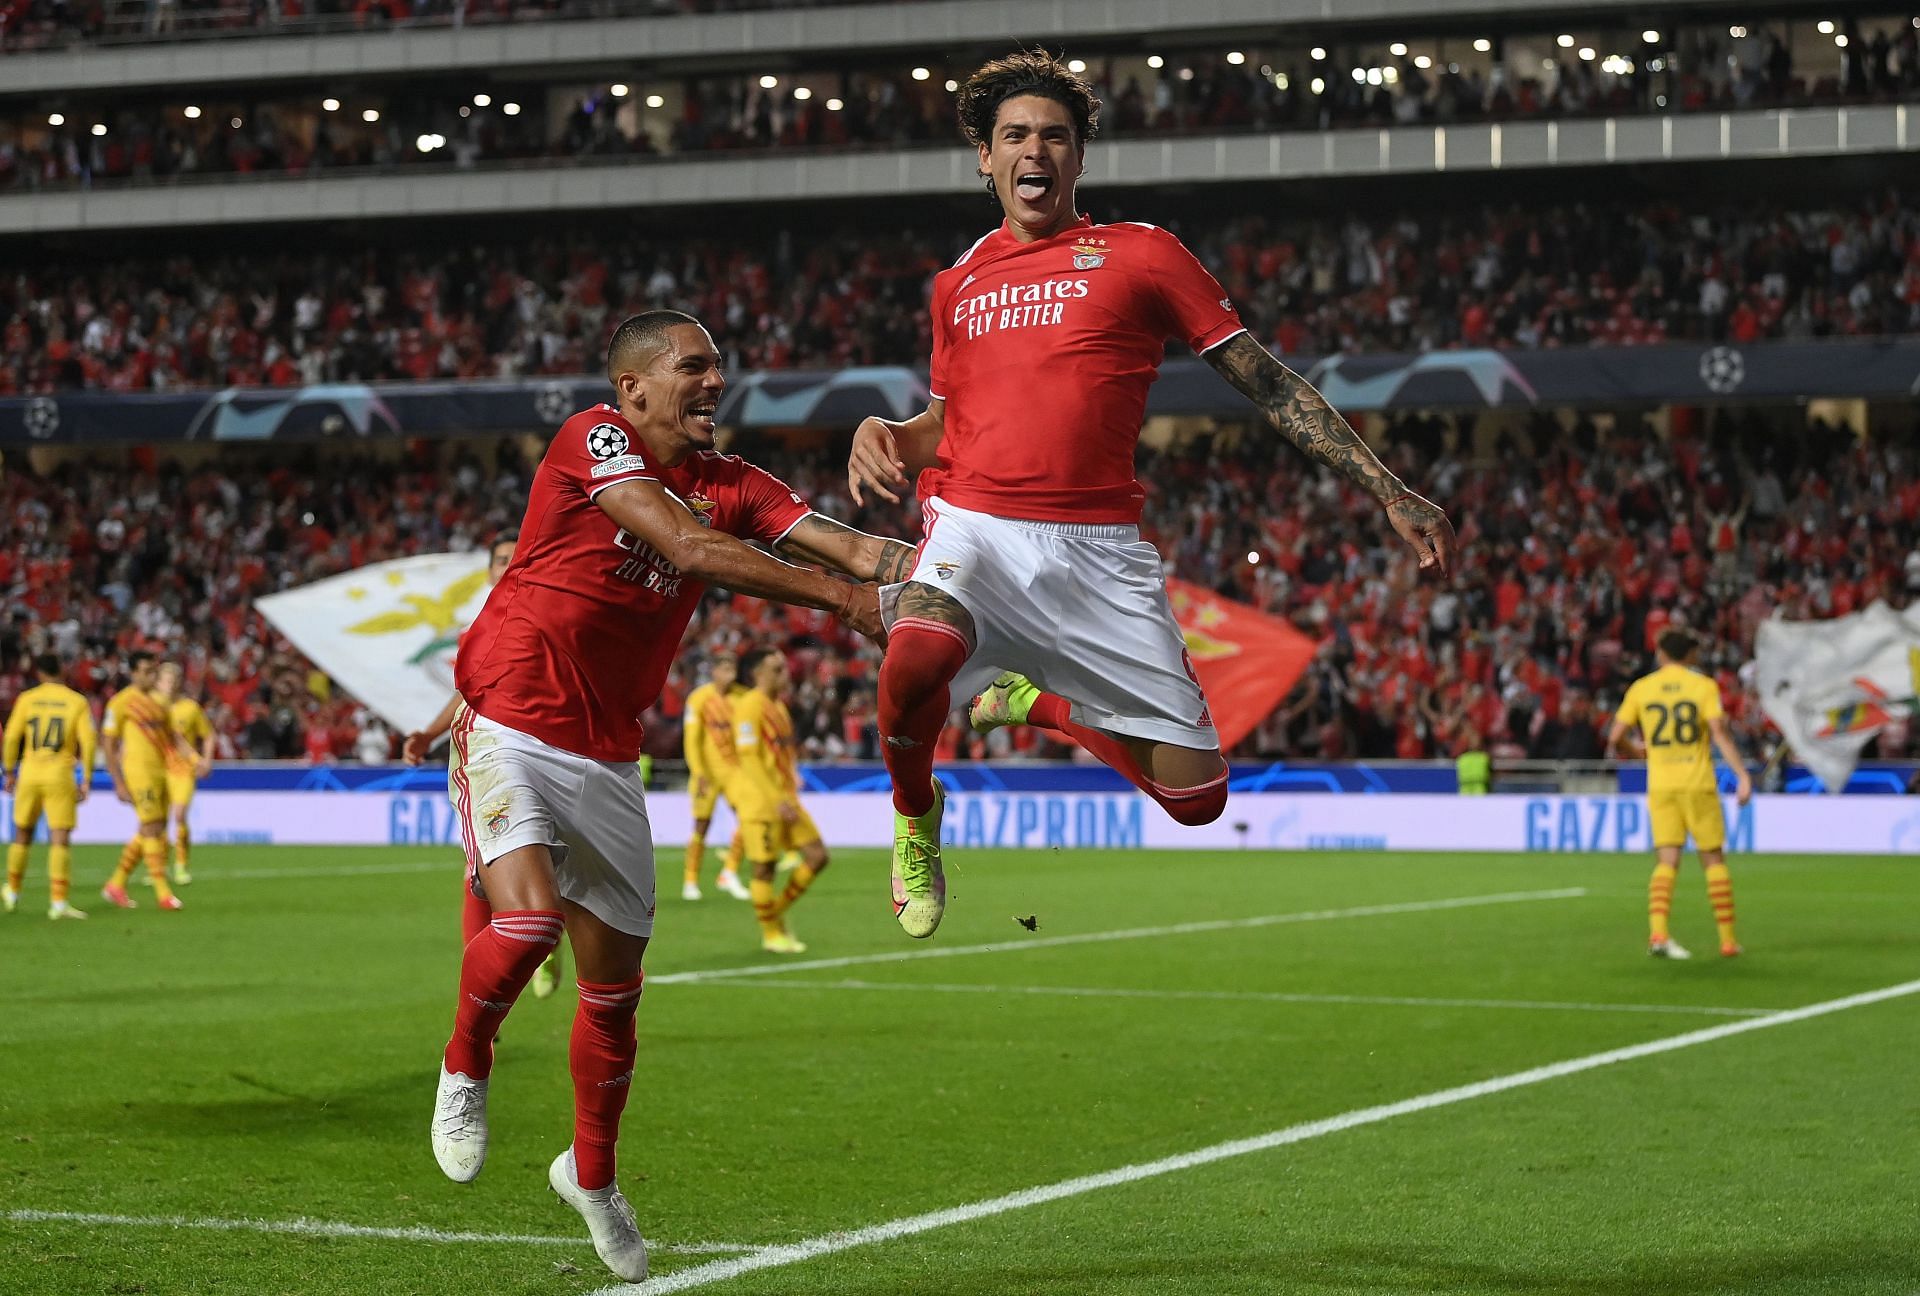 Darwin Nunez has been in fine form for Benfica